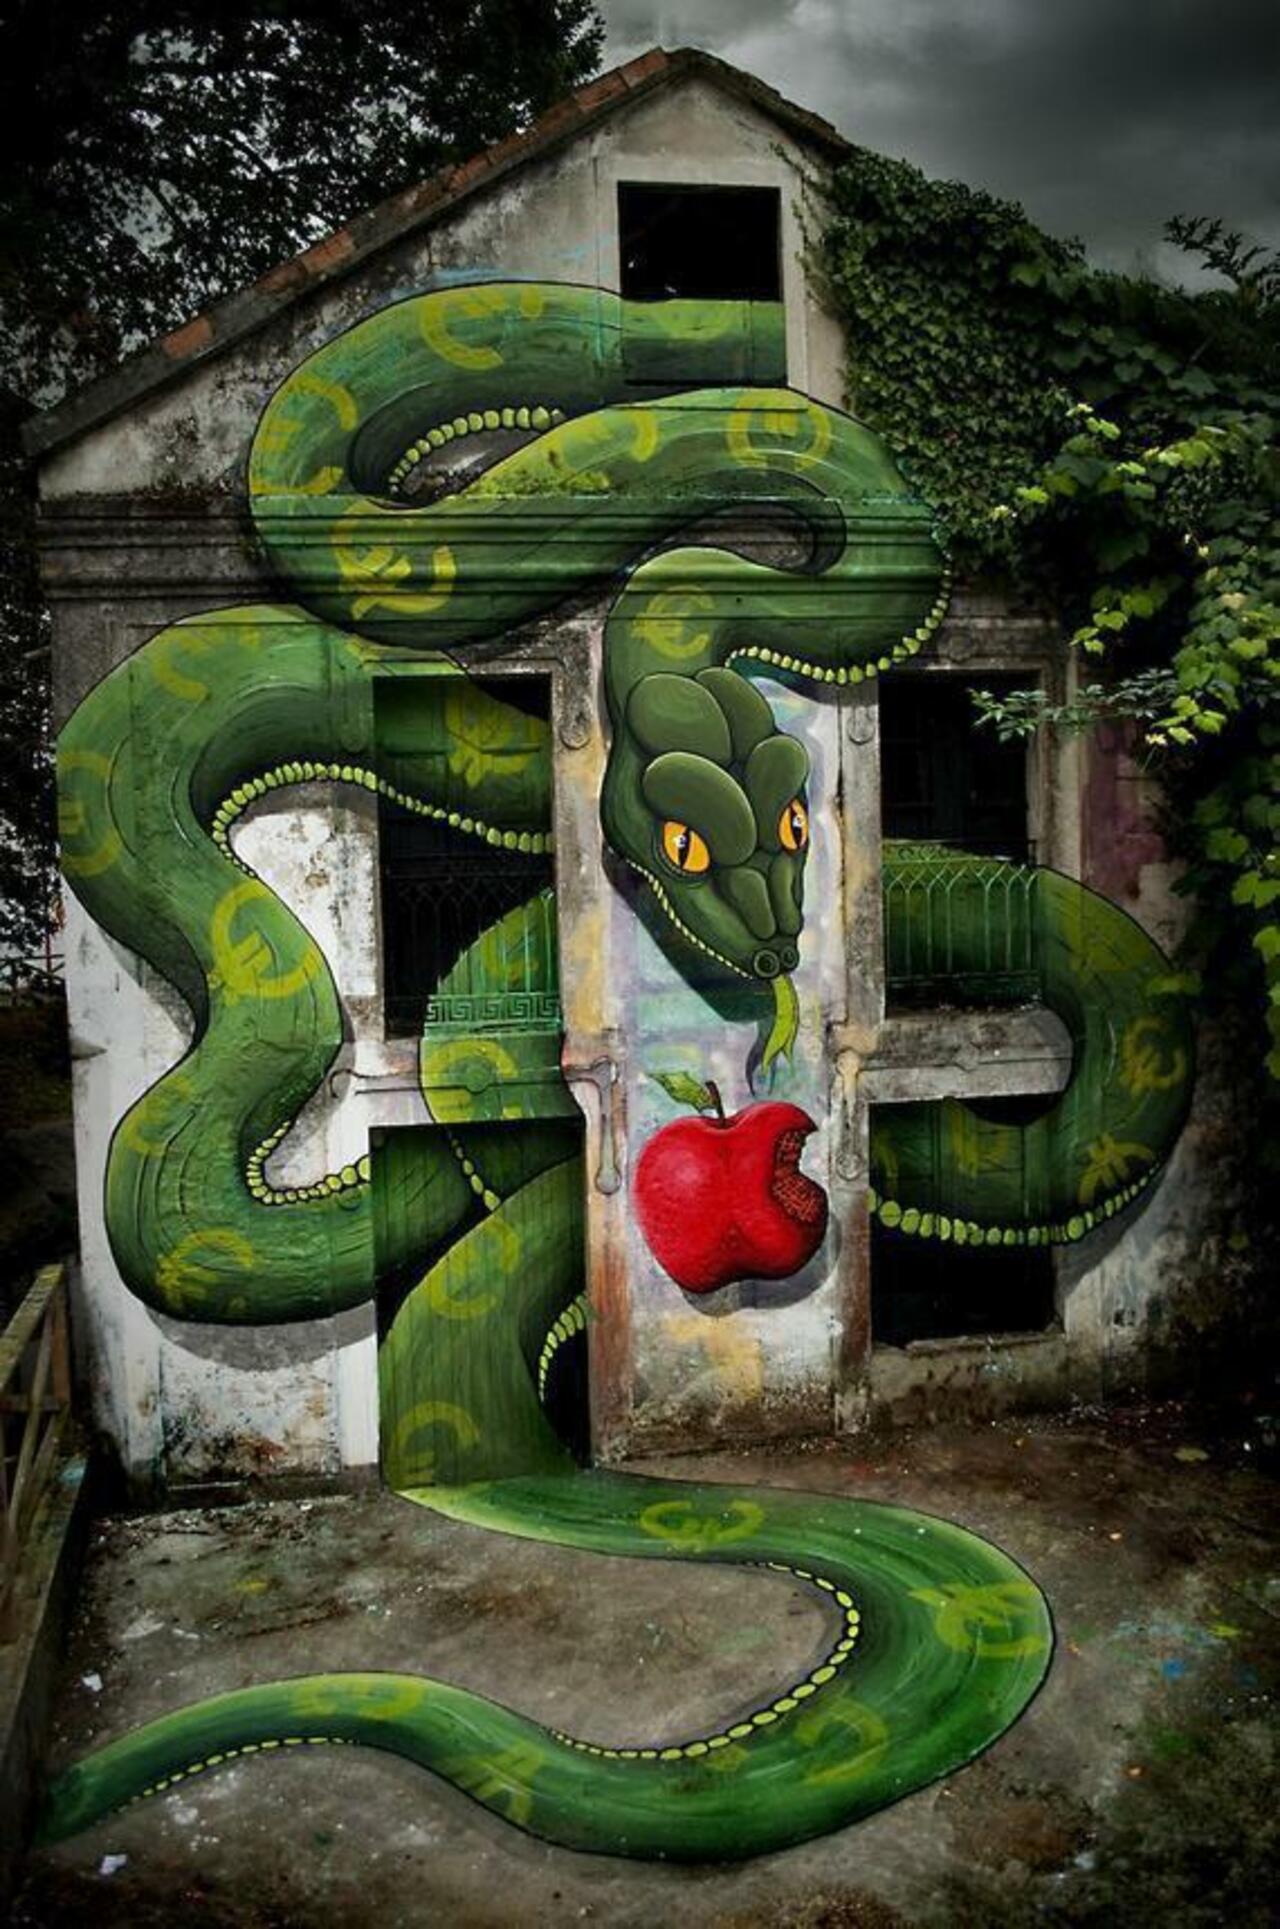 RT @AuKeats: #streetart in #spain #switch #graffiti #bedifferent #python #snake #arte #art http://t.co/XT096nfLCX